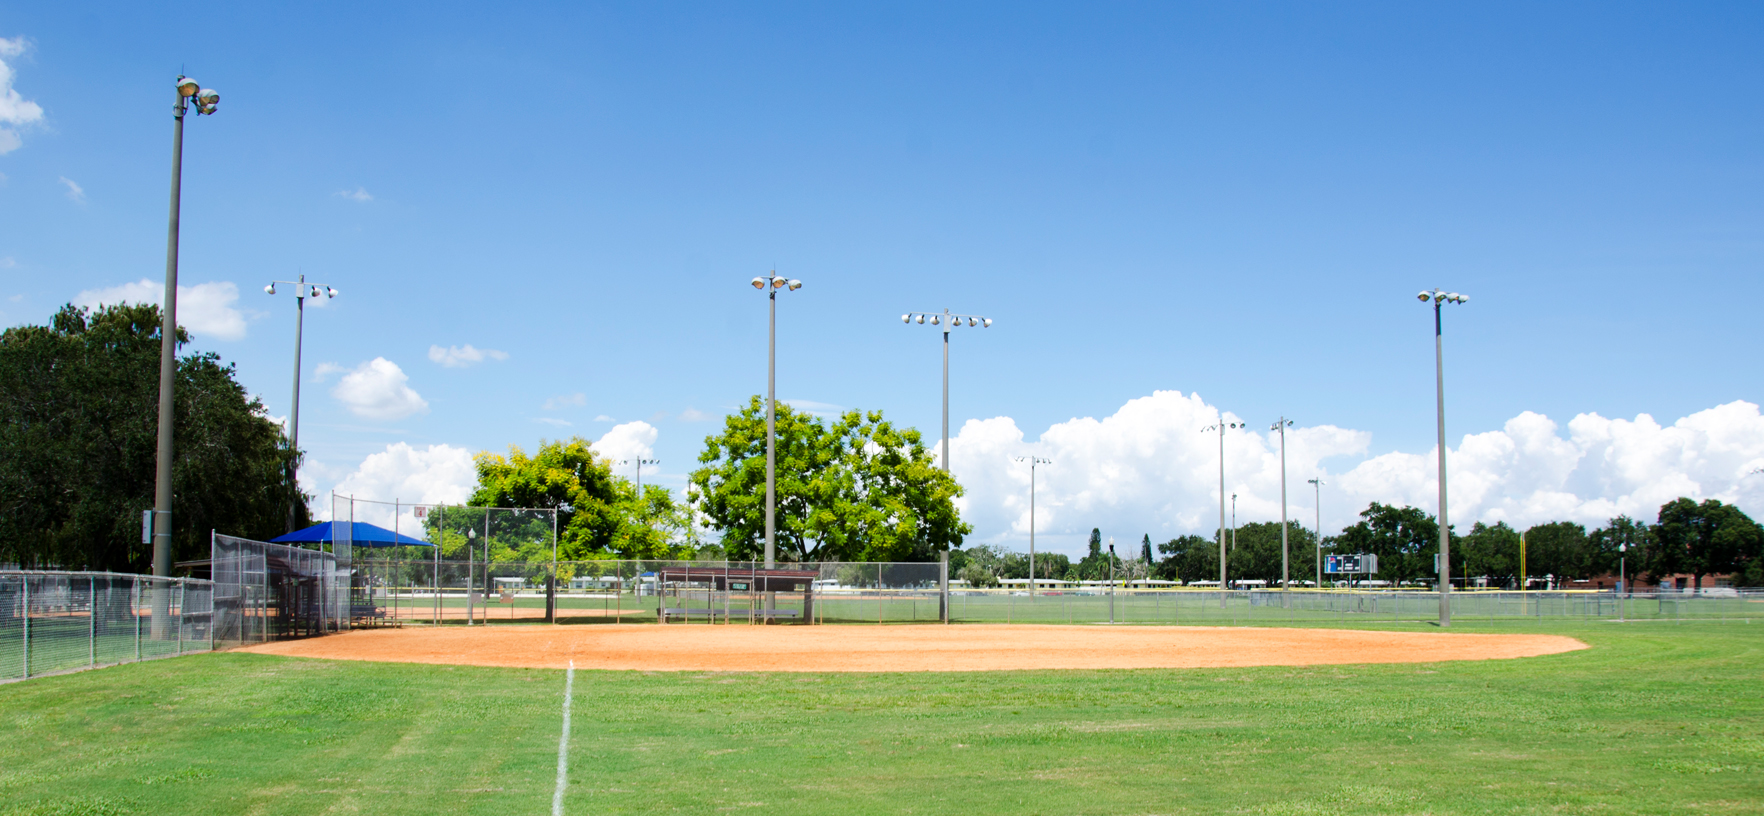 Woodlawn Park softball field